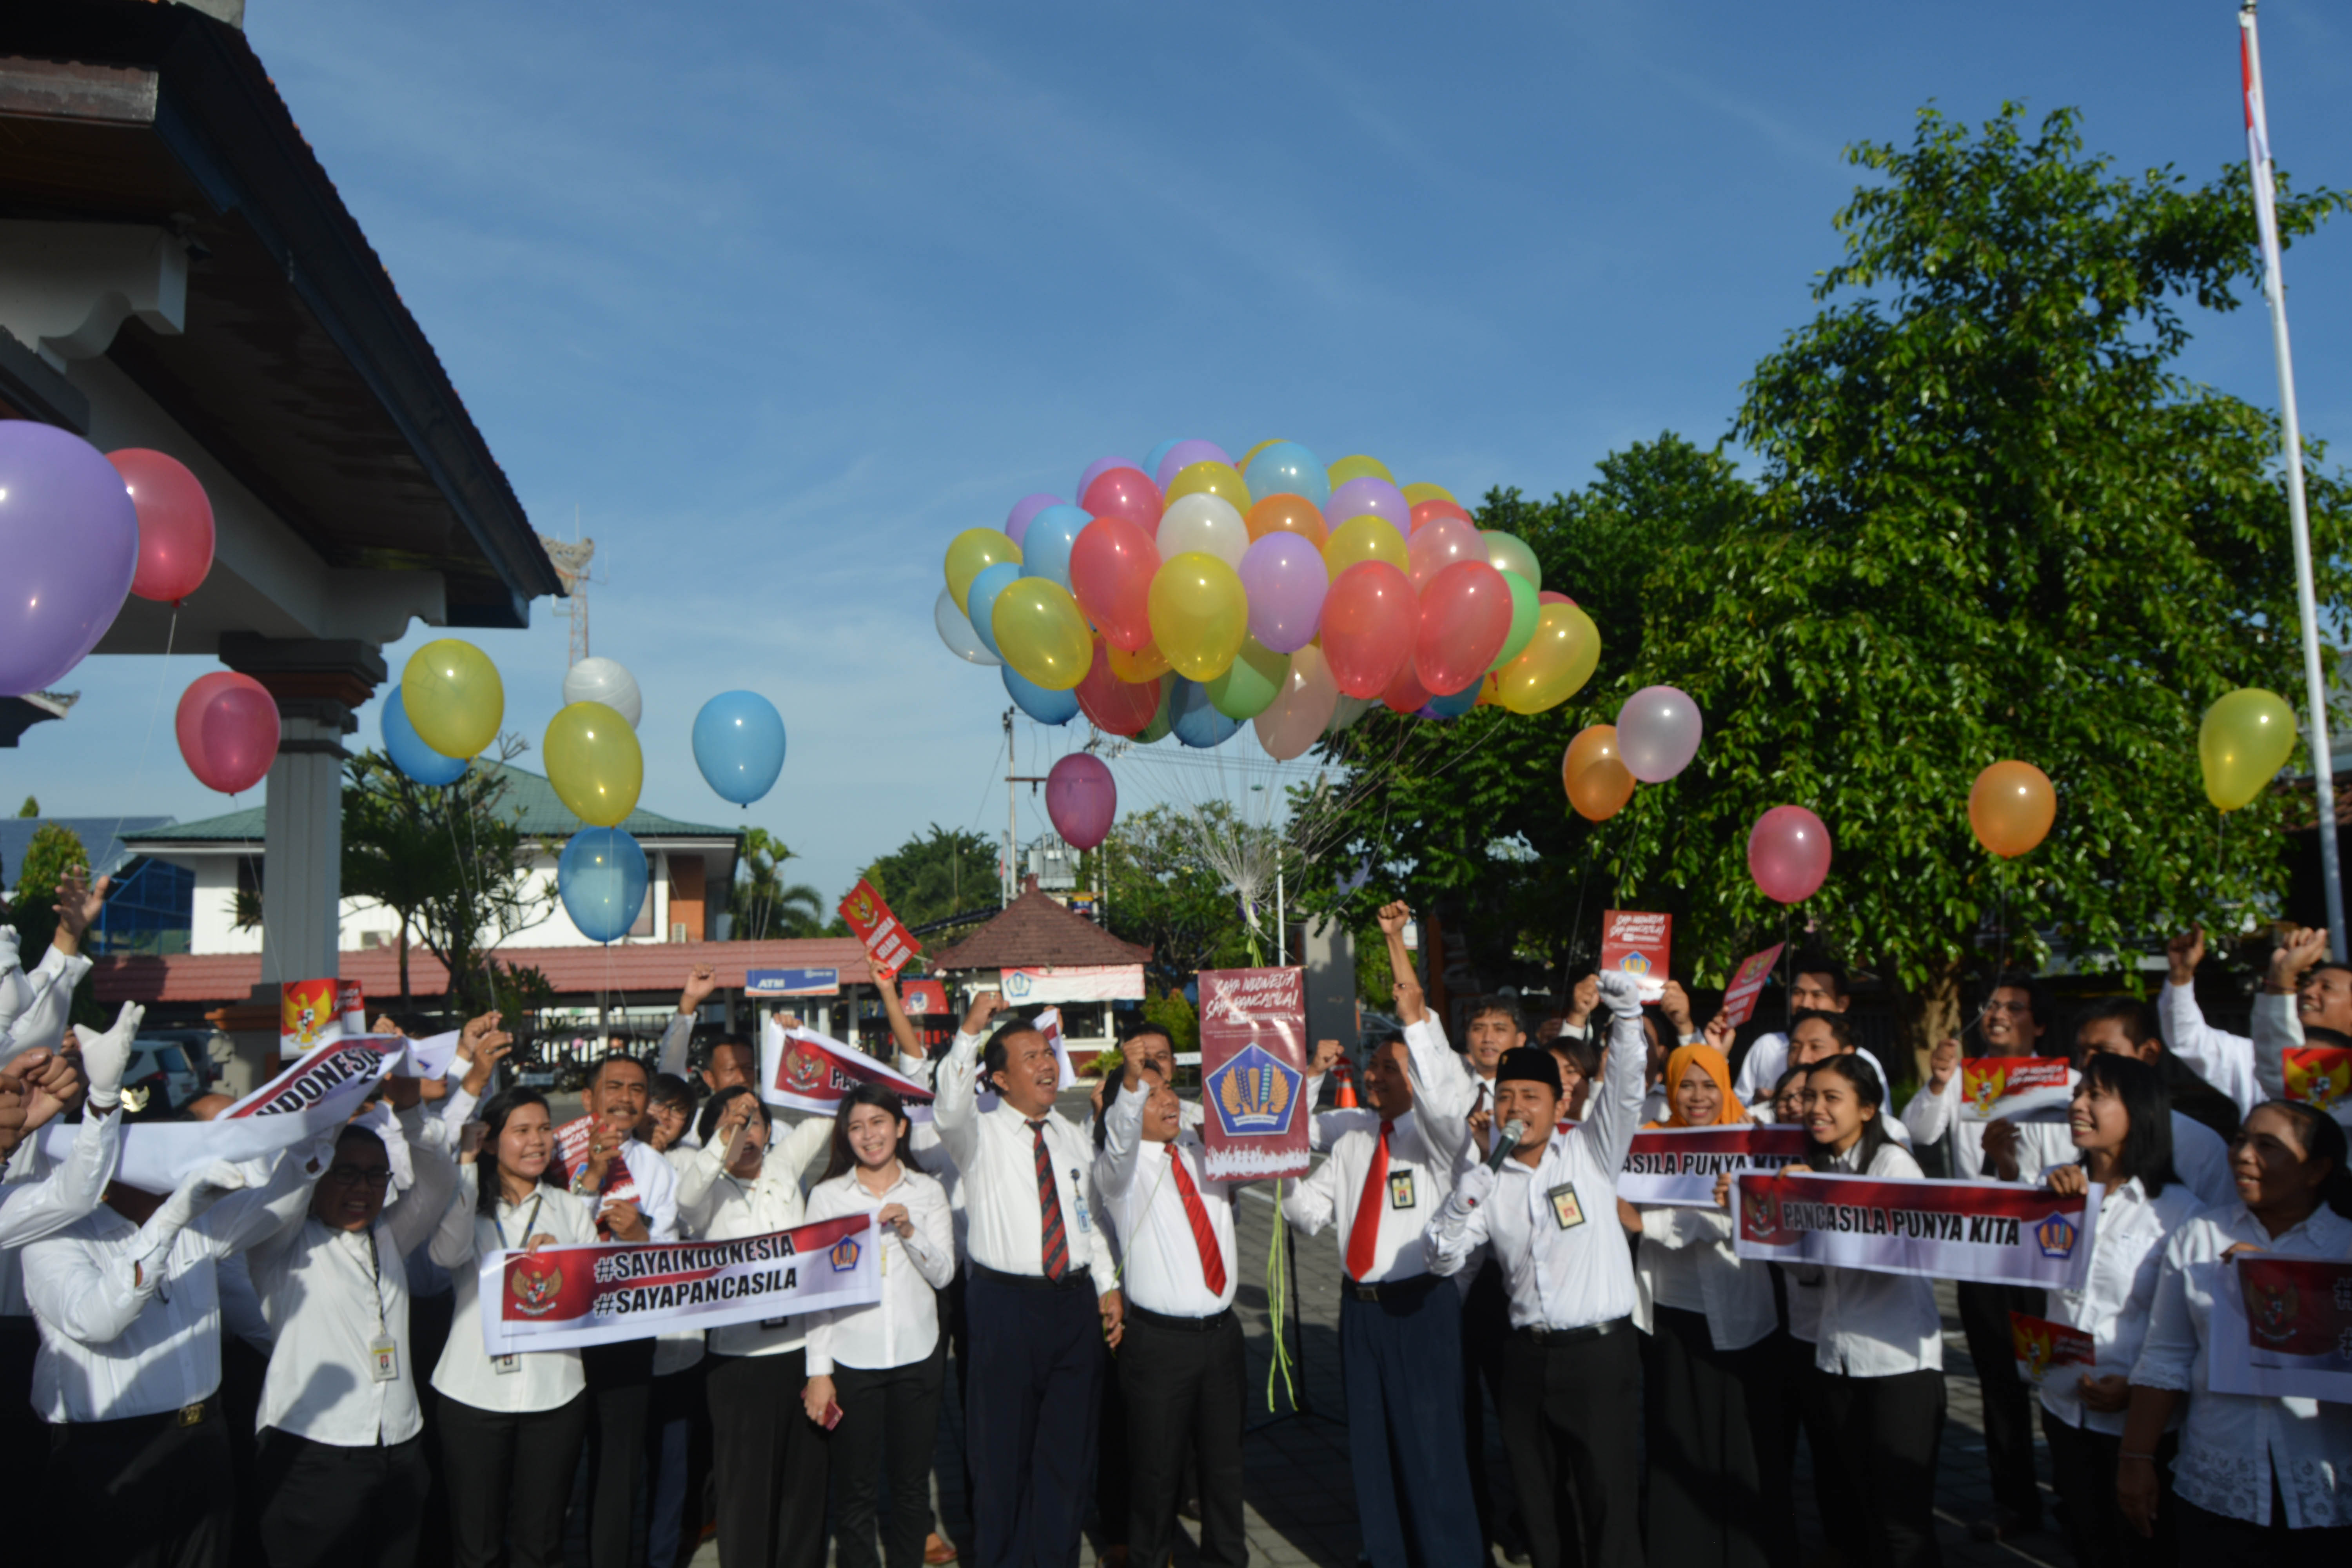 Peringatan Hari Lahir Pancasila ke-72 KPKNL Singaraja: “SAYA INDONESIA, SAYA PANCASILA”